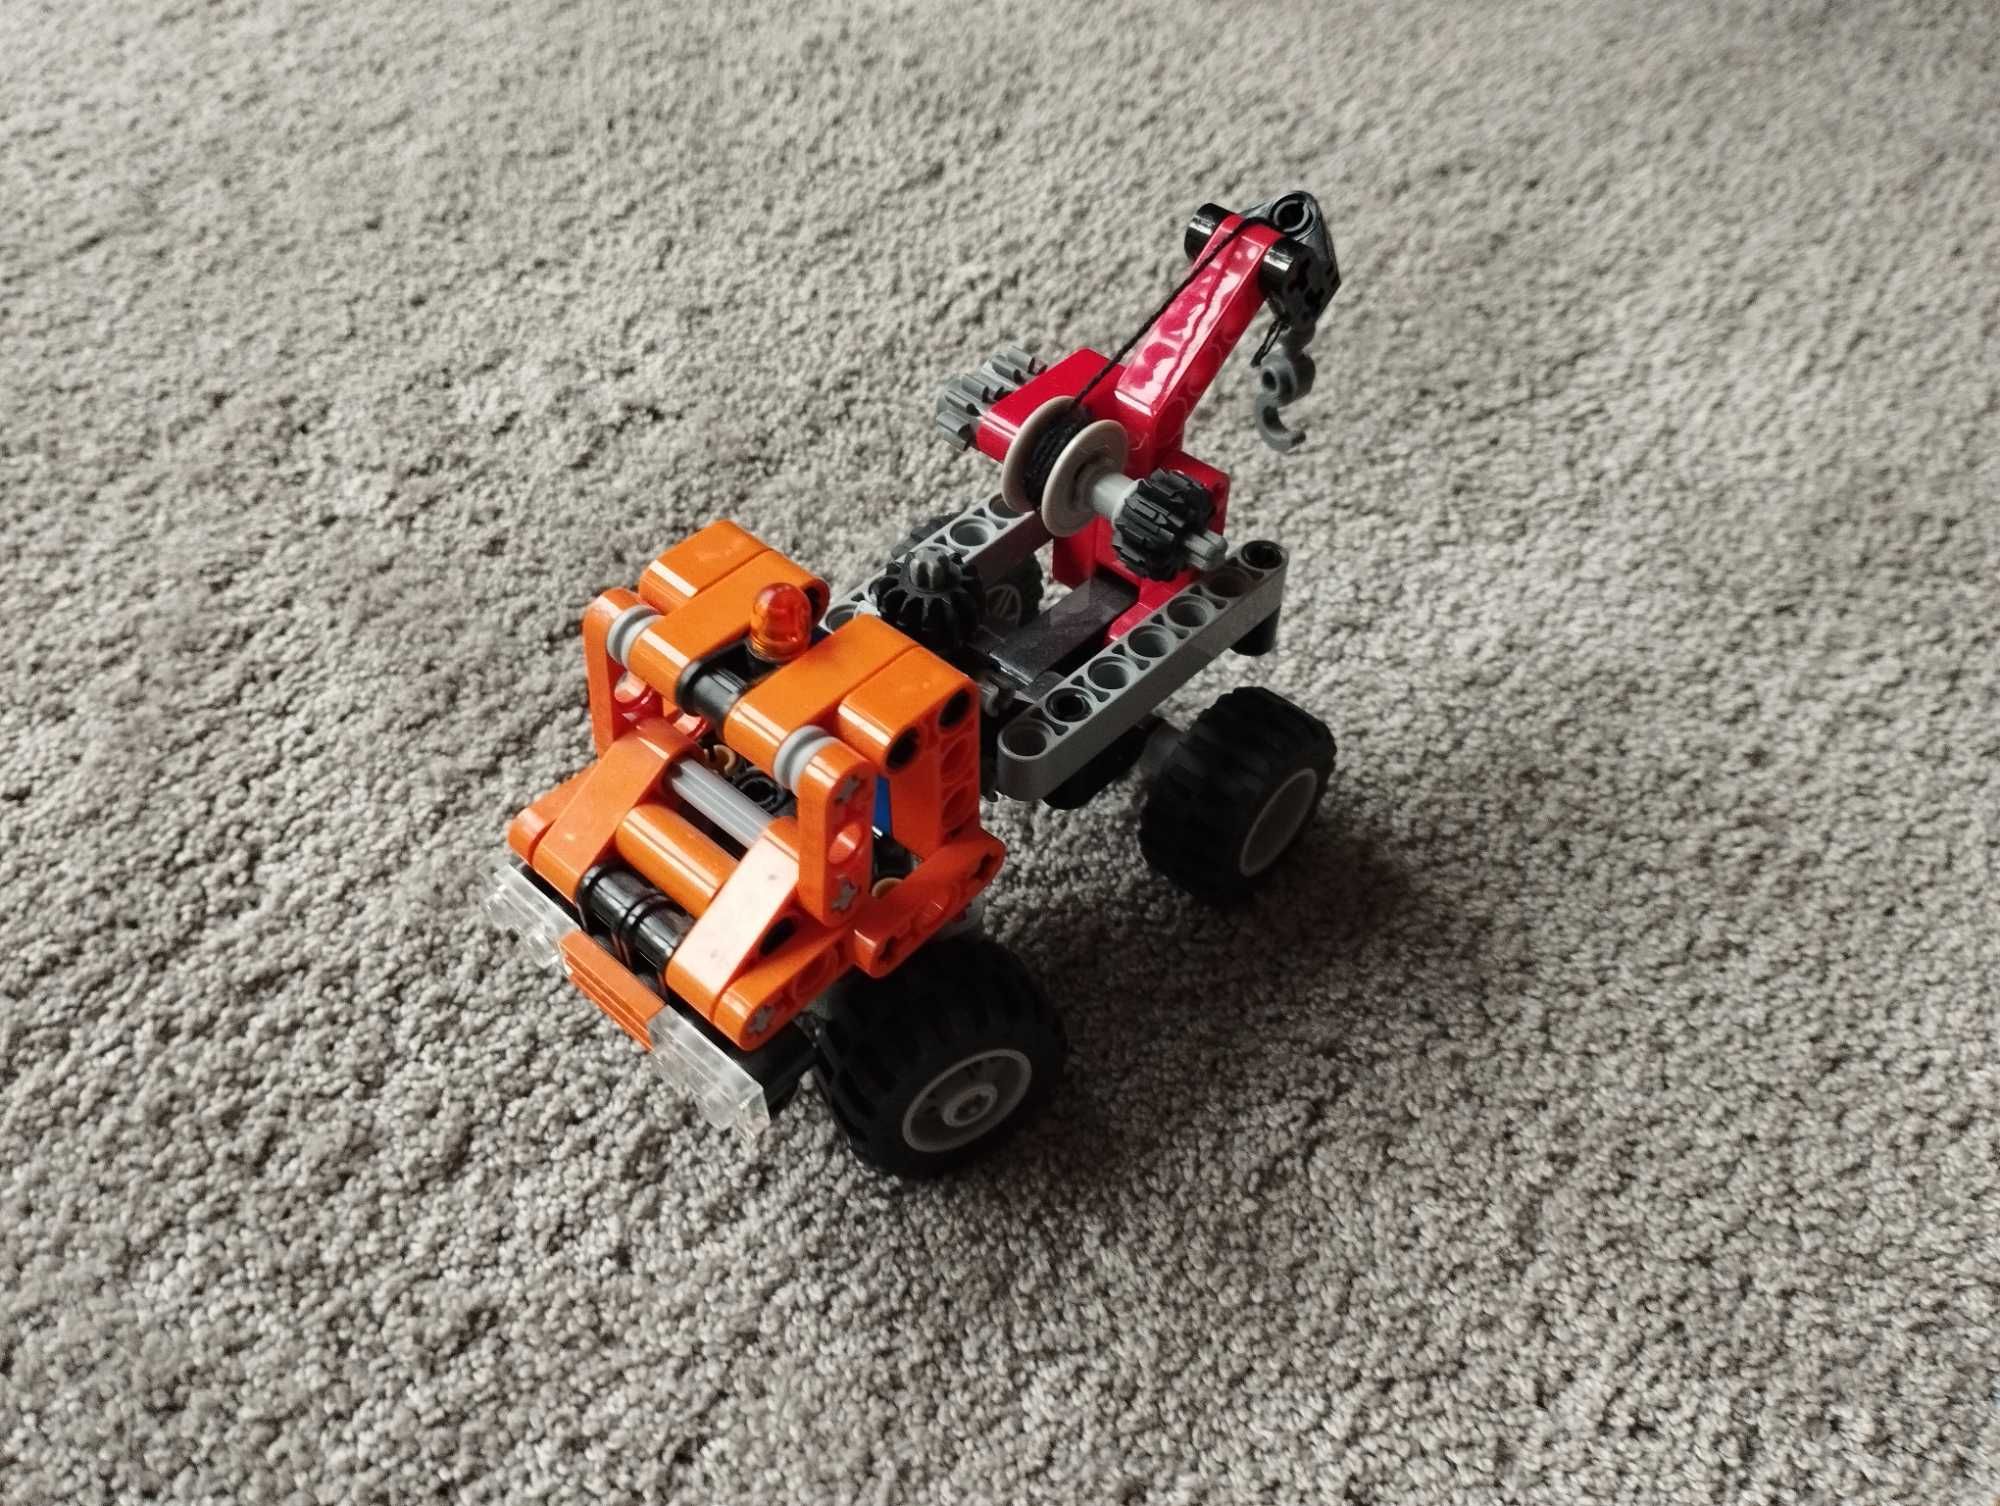 Klocki LEGO TECHNIC Minipomoc drogowa 9390